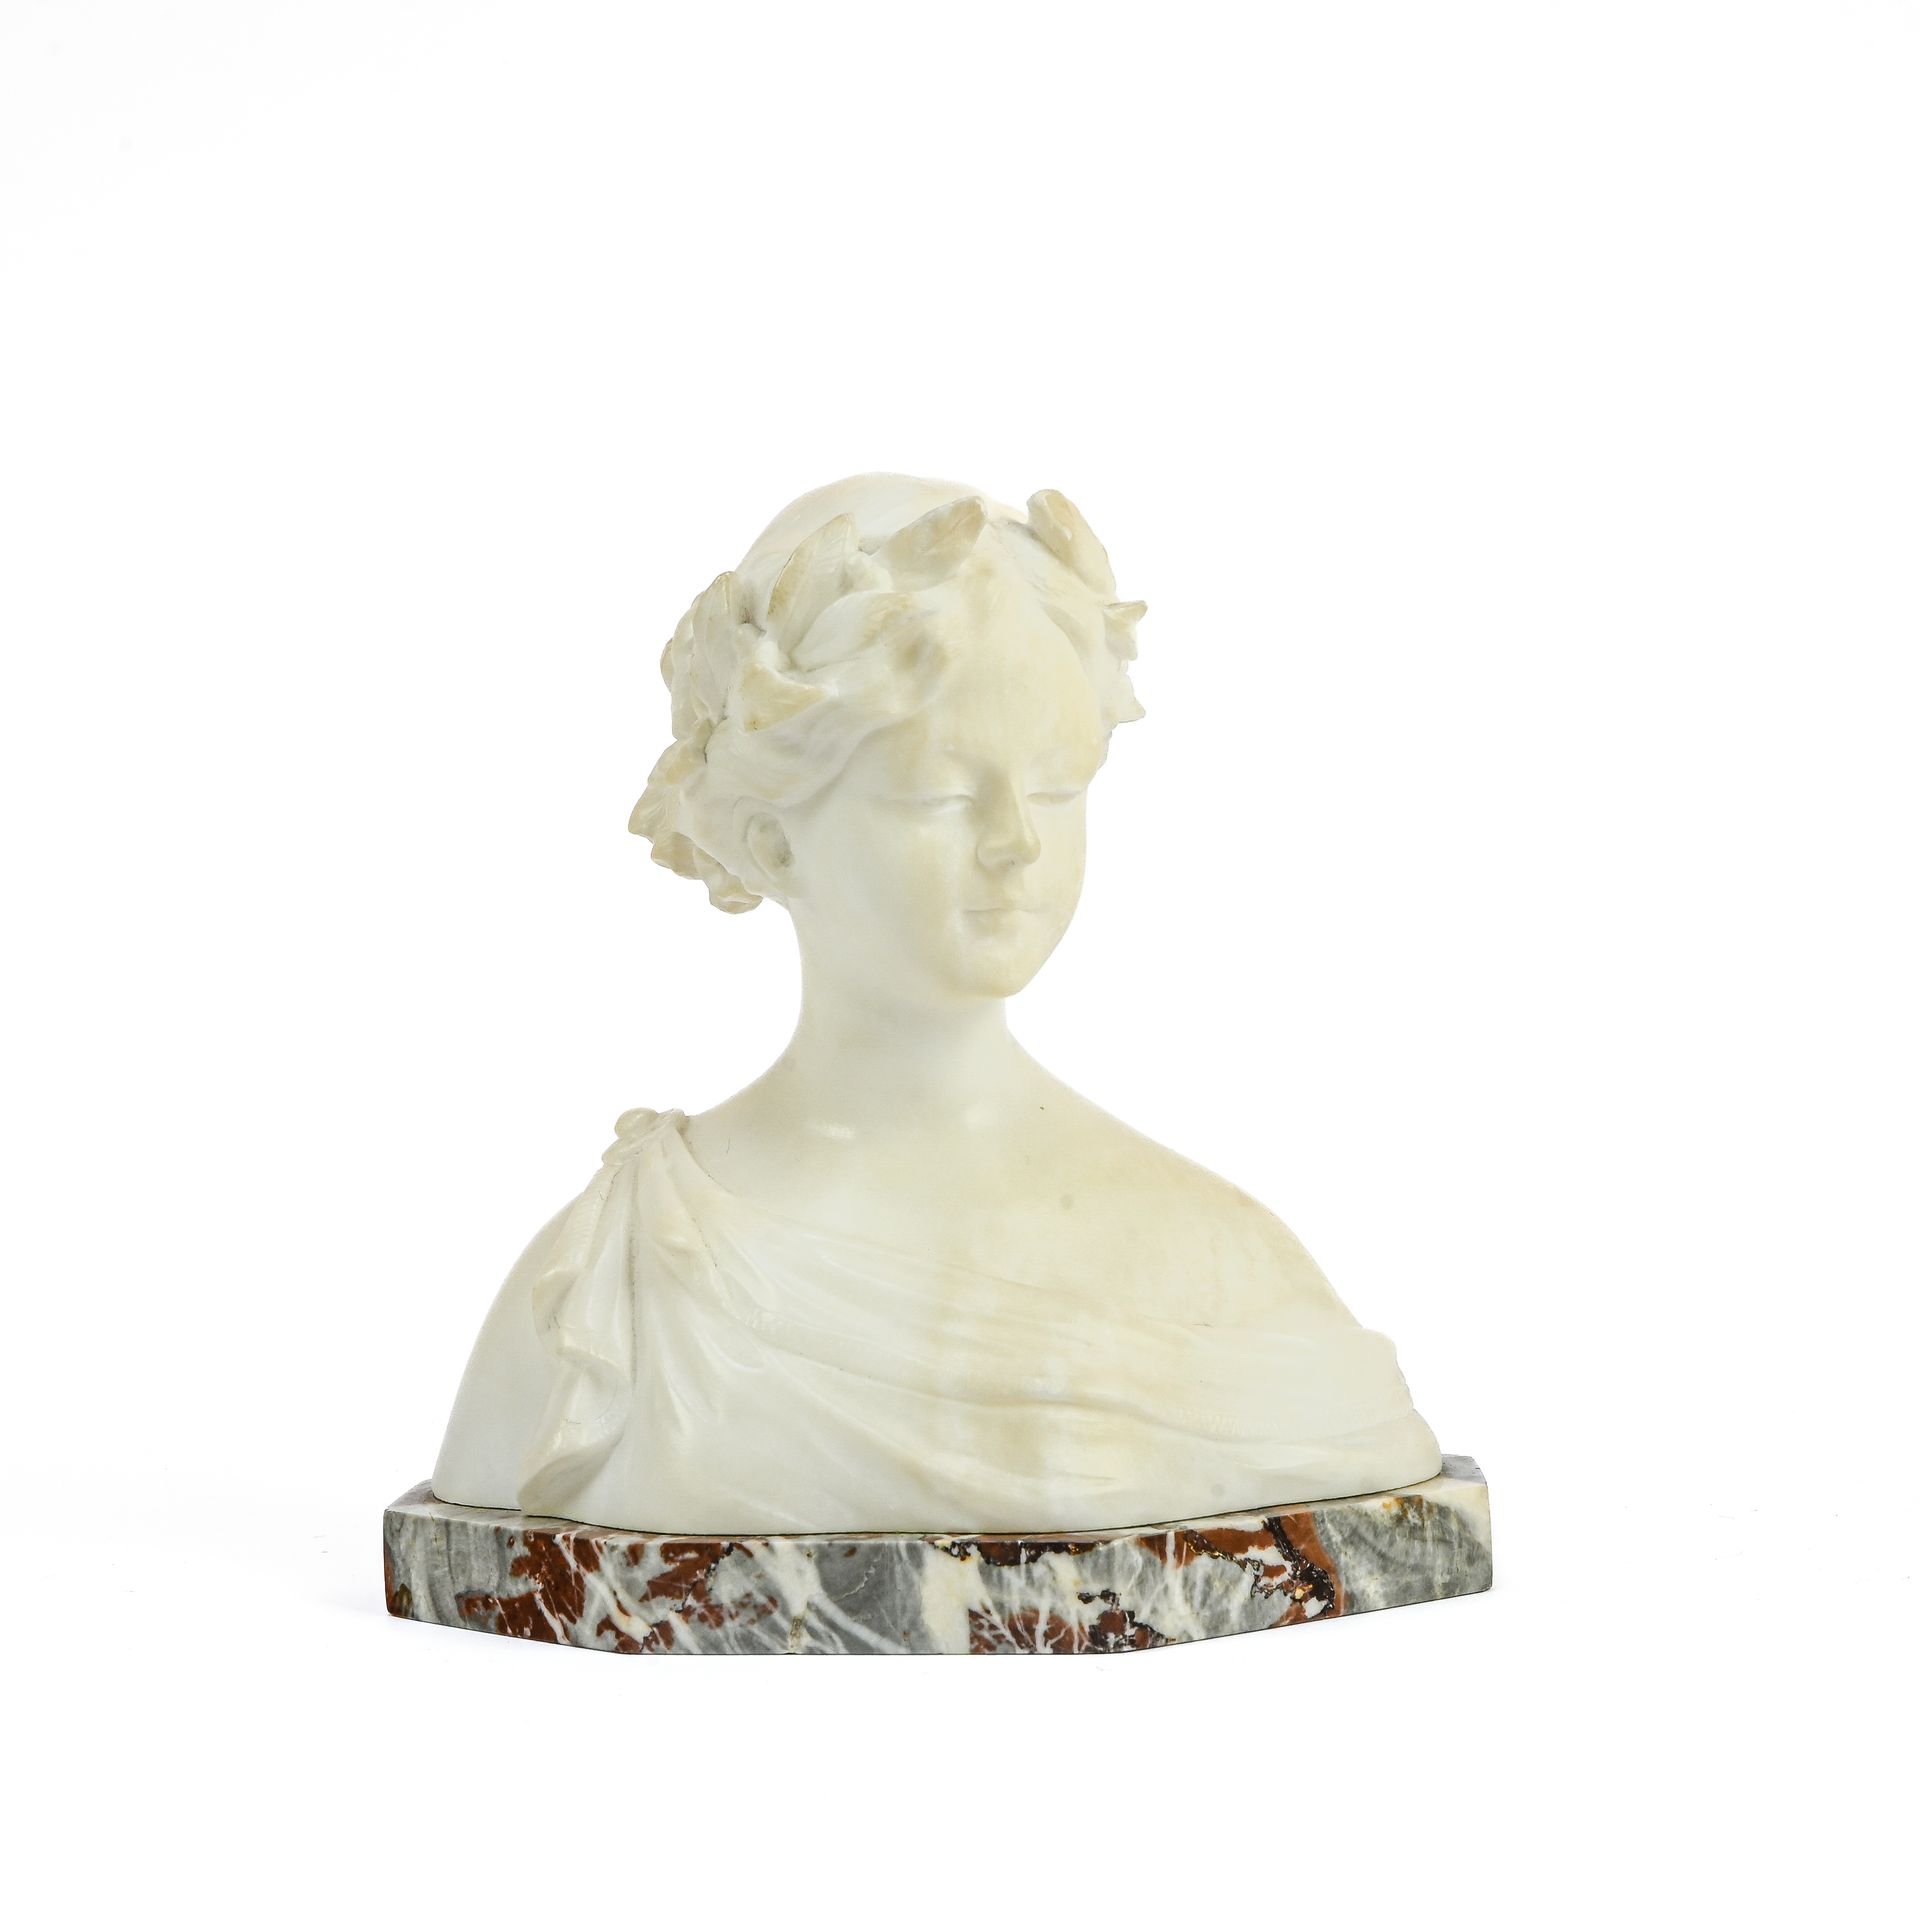 ALPHONSE HENRI NELSON (1854 - 1919) 阿尔方斯-亨利-内尔森 (1854 - 1919)

尹娜



白色大理石雕塑，背面有&hellip;